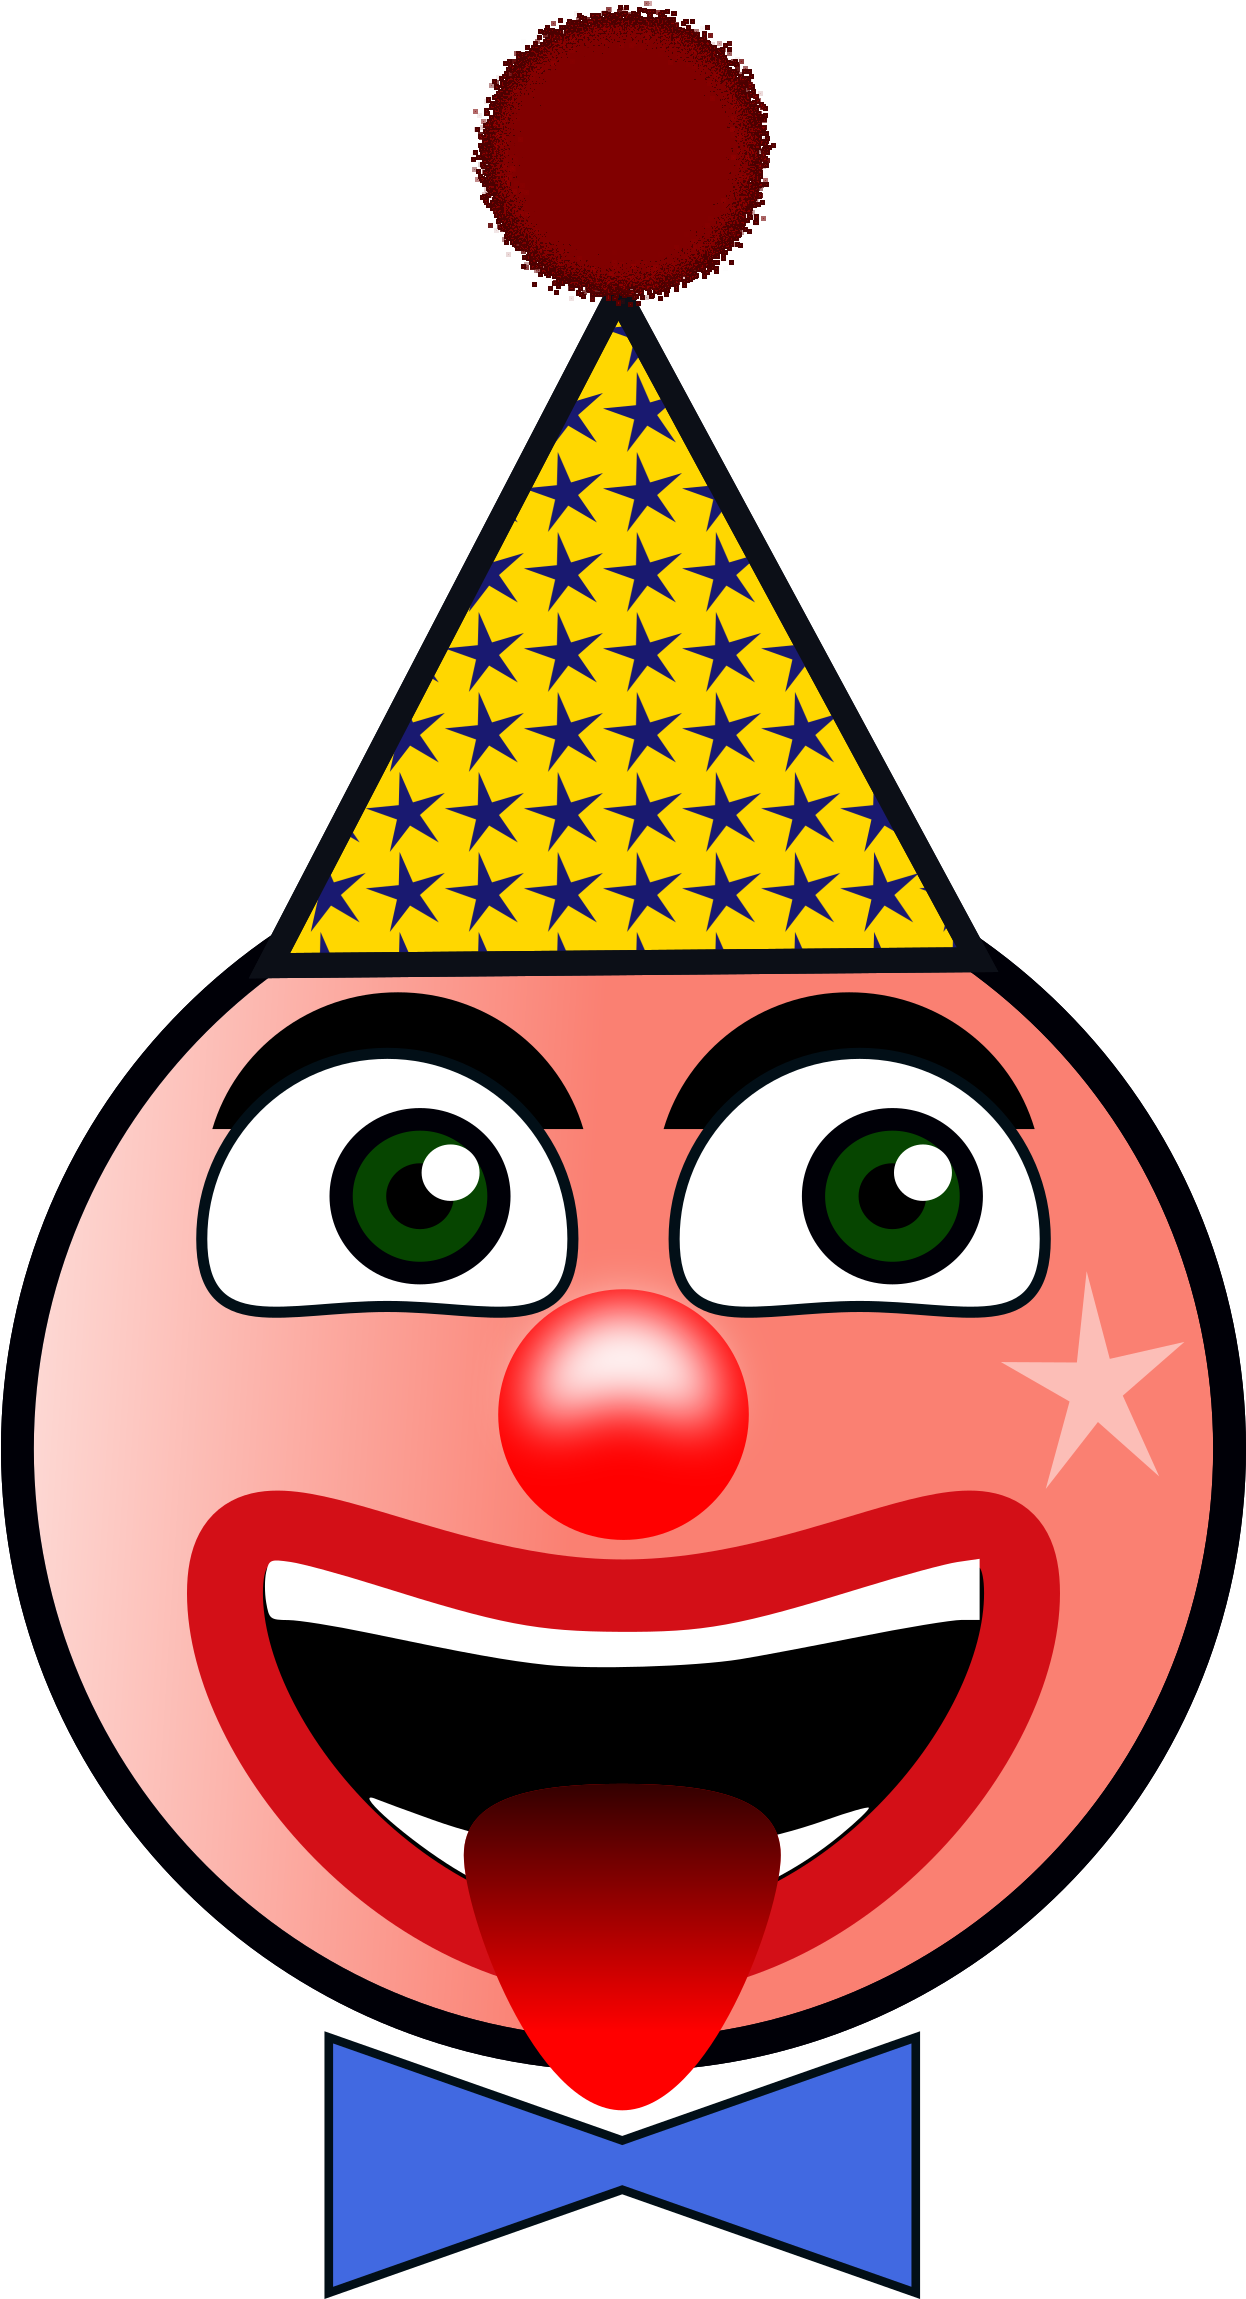 Head-clown - Humor Cliparty (1245x2400)